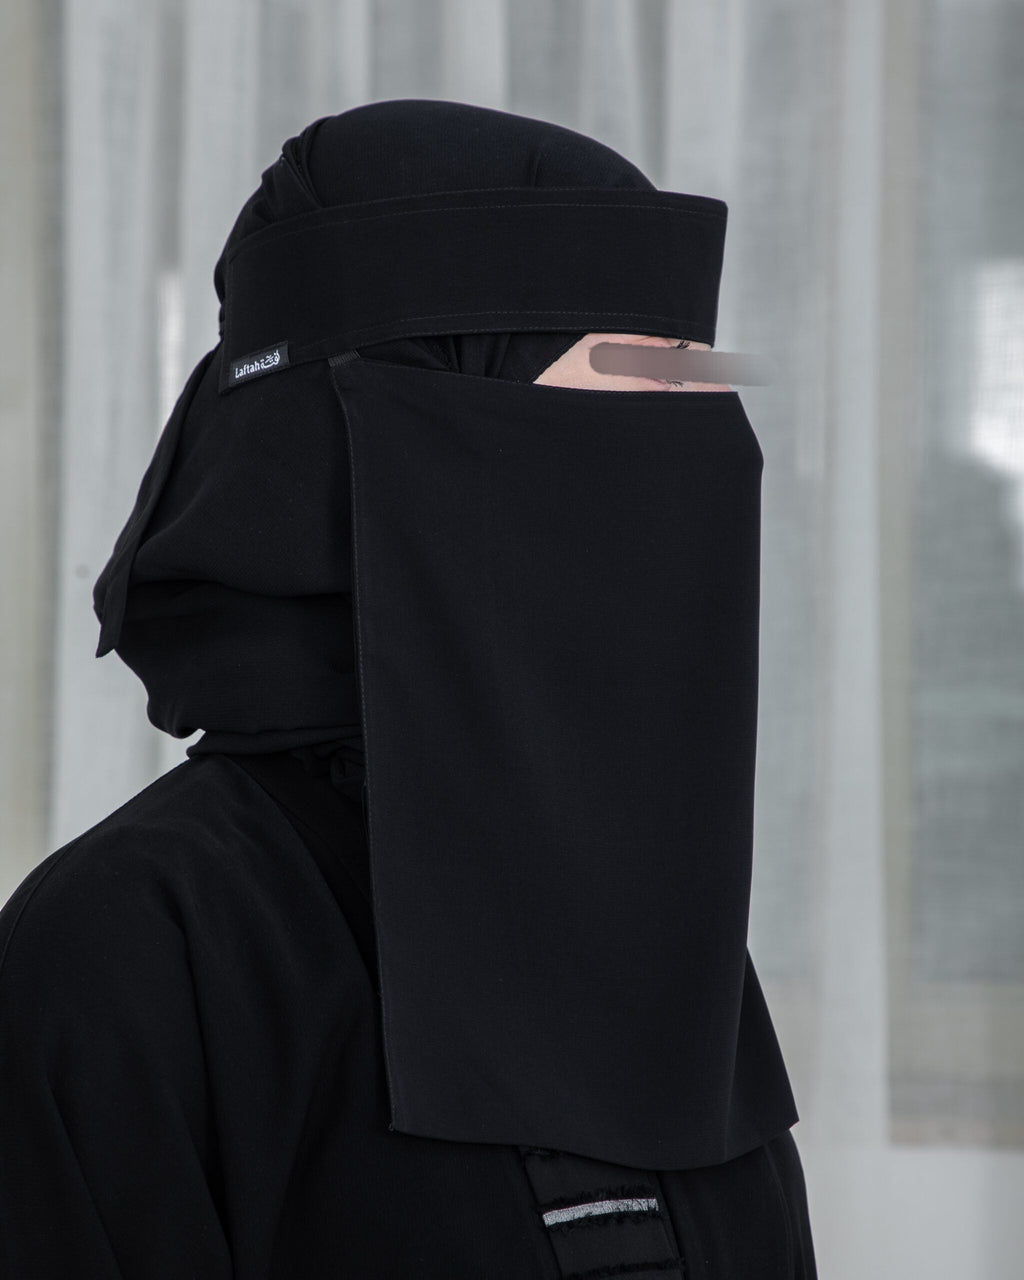 Laftah Long Plain Elastic Niqab